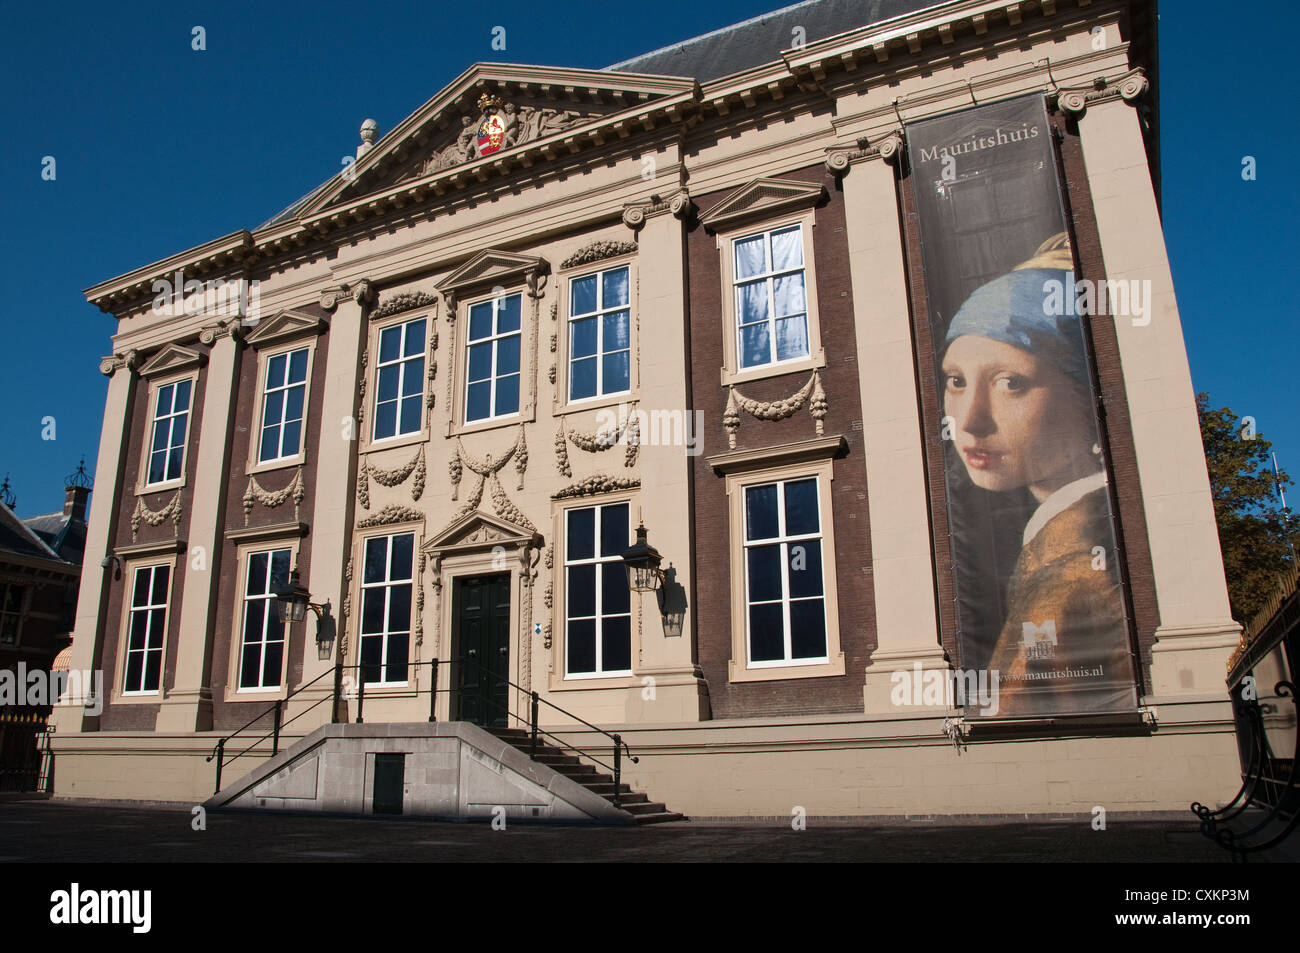 Mauritshuis Facade, Den Haag, The Netherlands Stock Photo